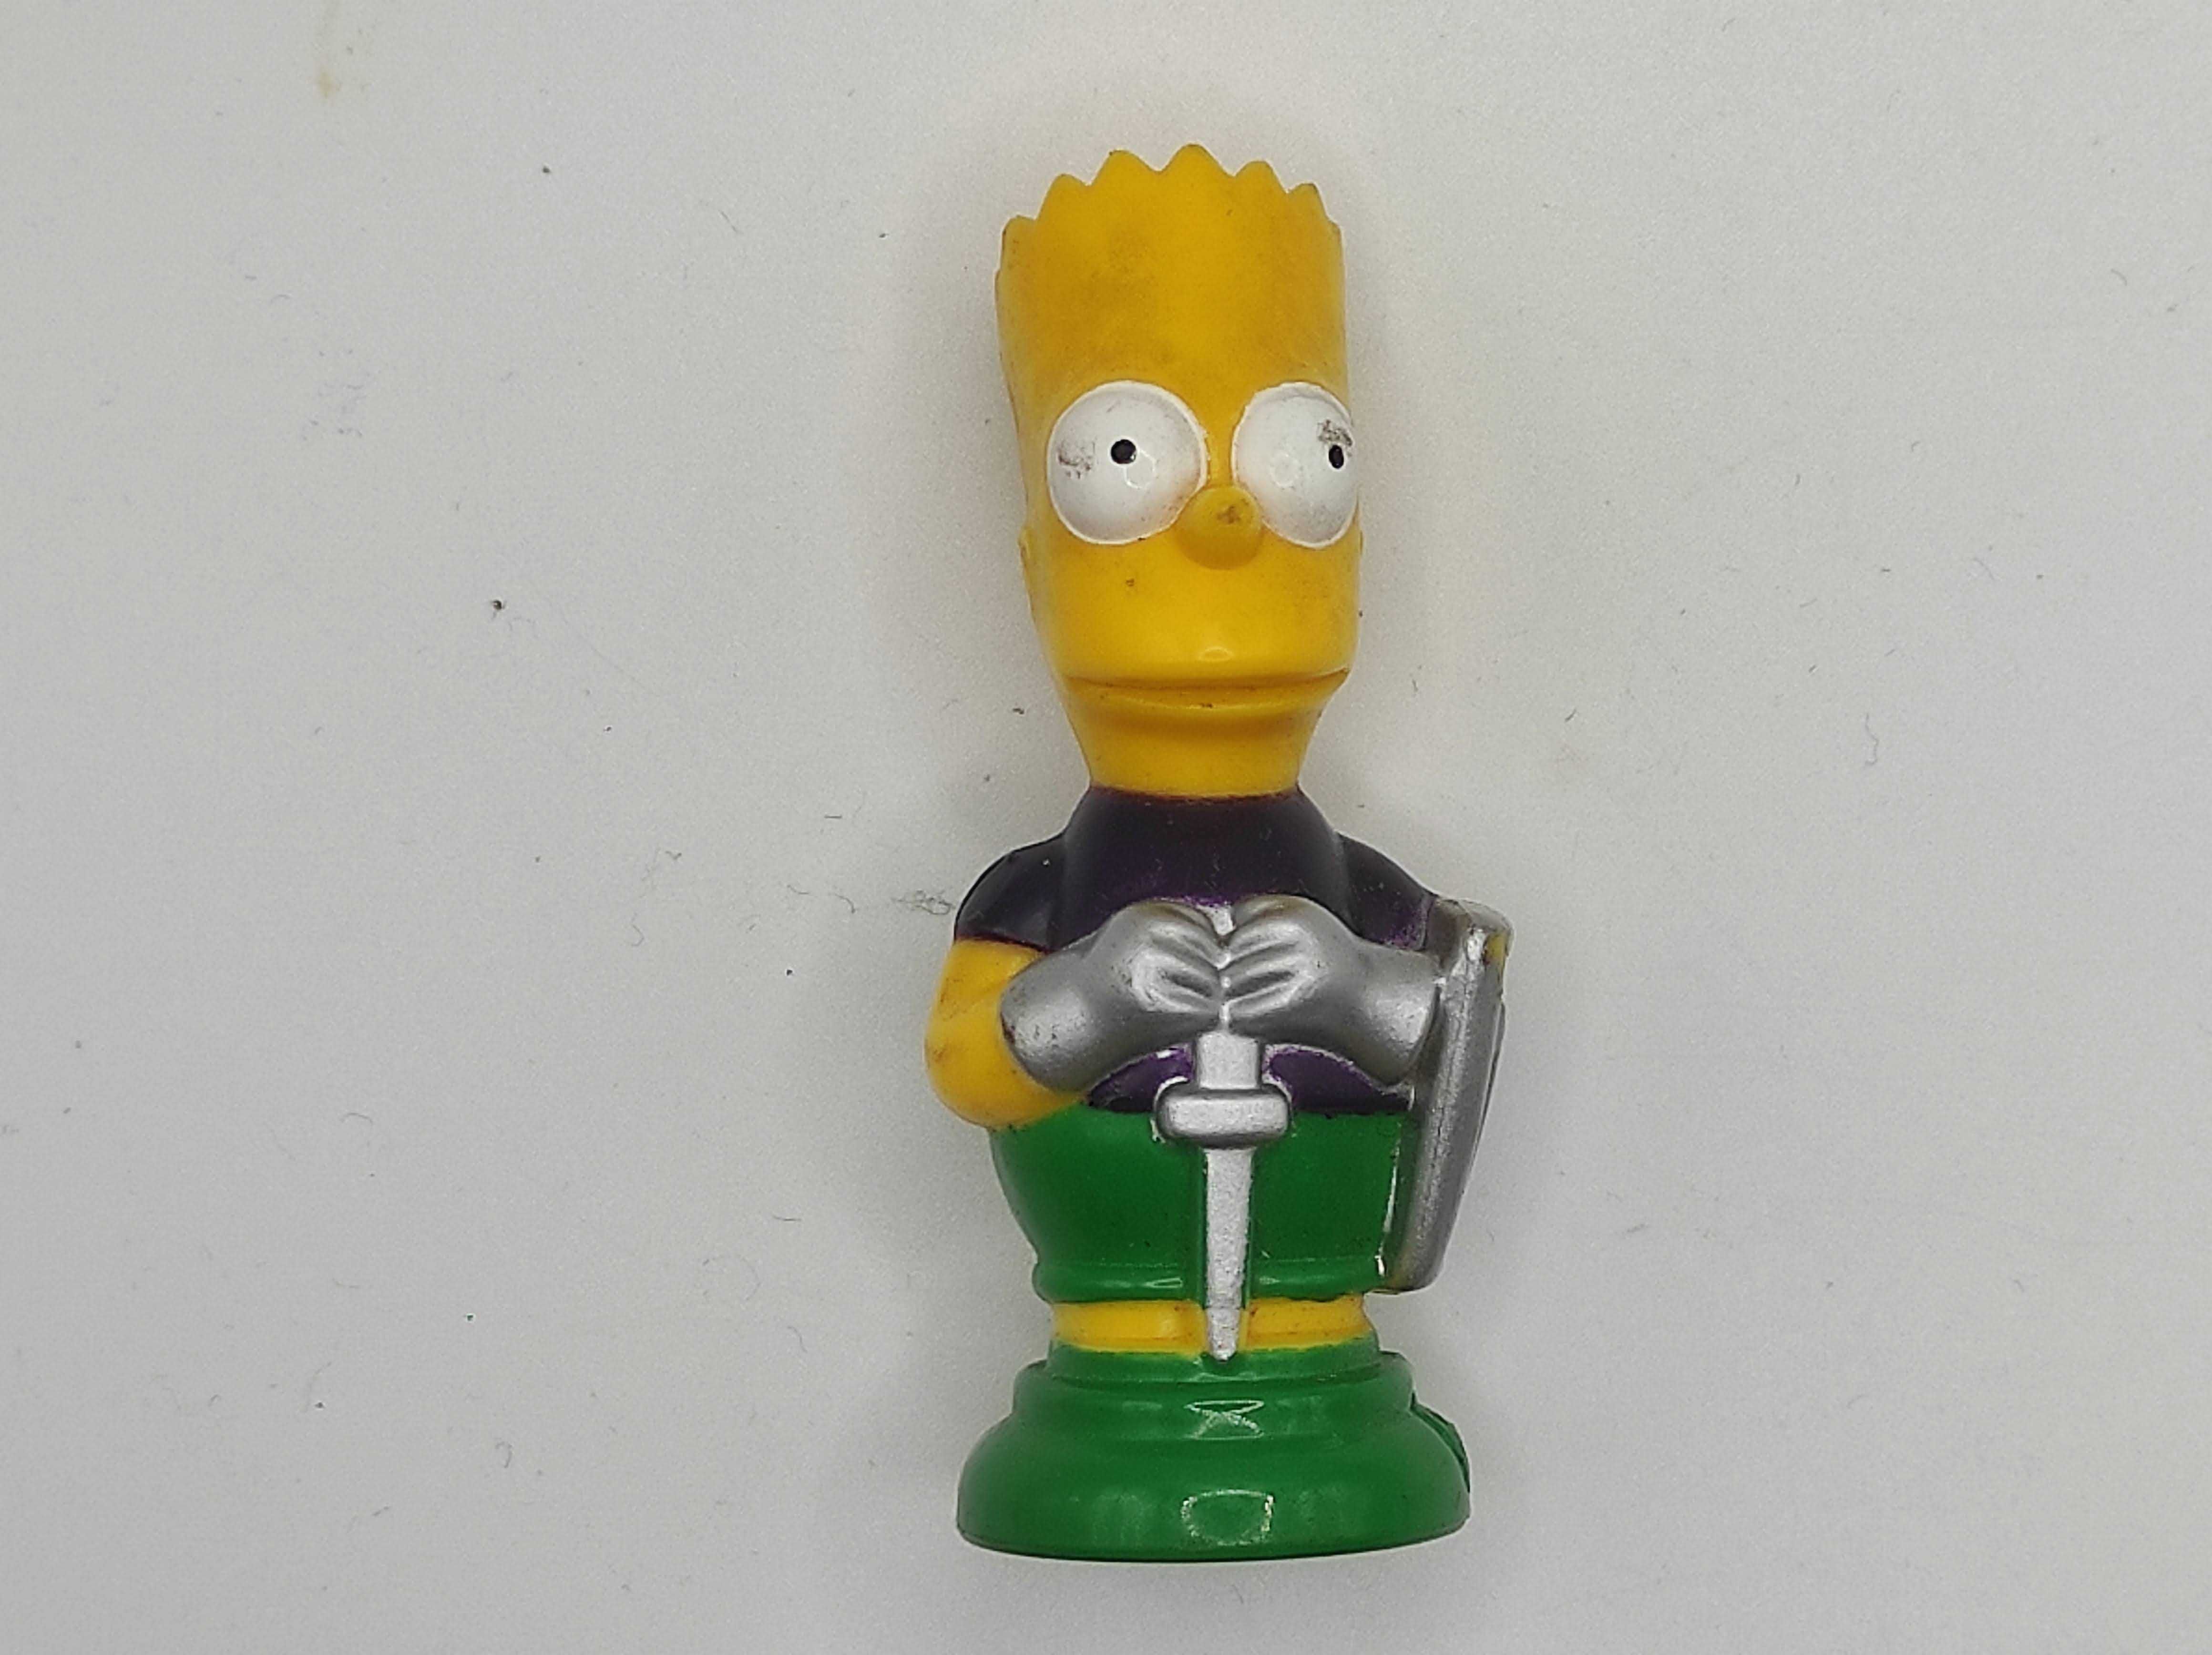 Figurka 3x Bart Simpson figurka szachowa trzy sztuki K3#212